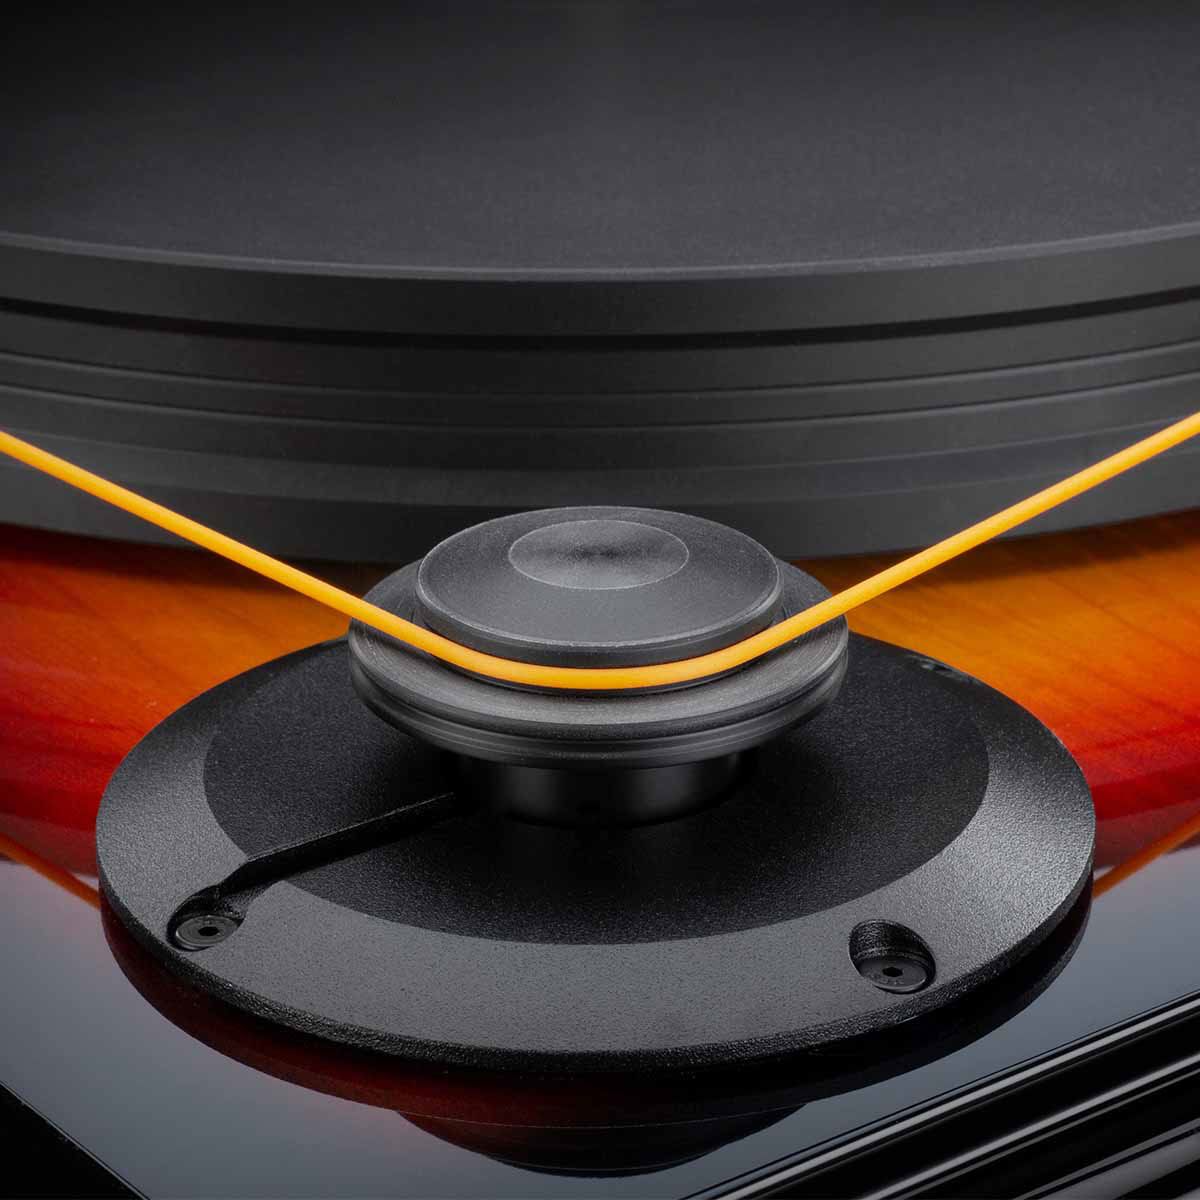 MoFi Fender PrecisionDeck Turntable, Sunburst, detailed view of belt pulley